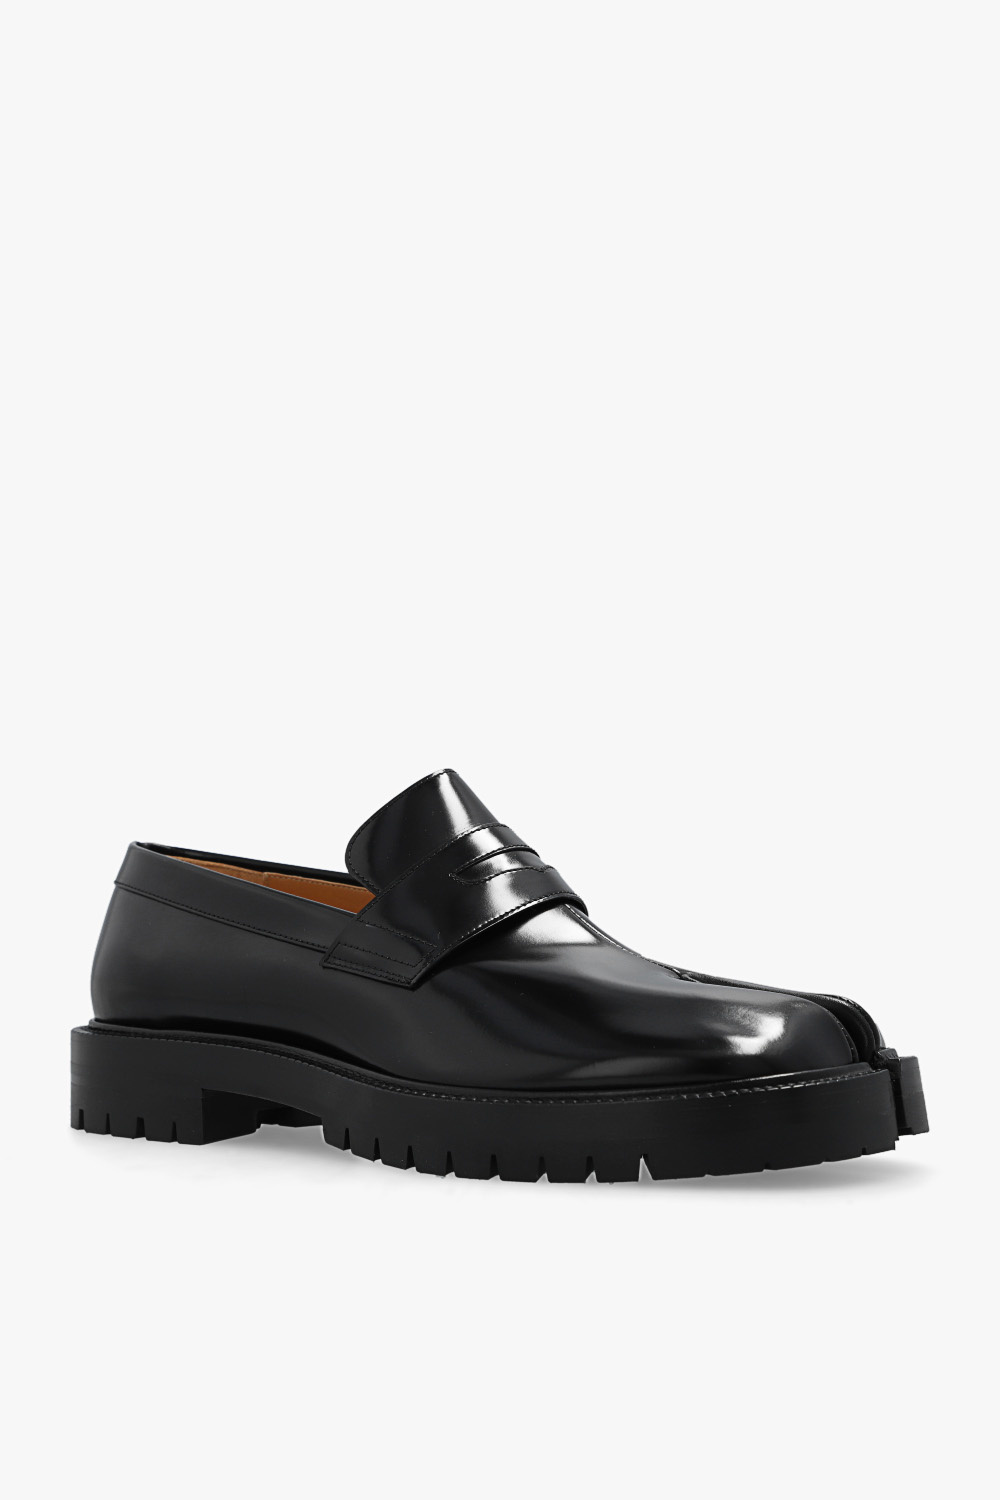 Maison Margiela 'Tabi' moccasins | Men's Shoes | Vitkac